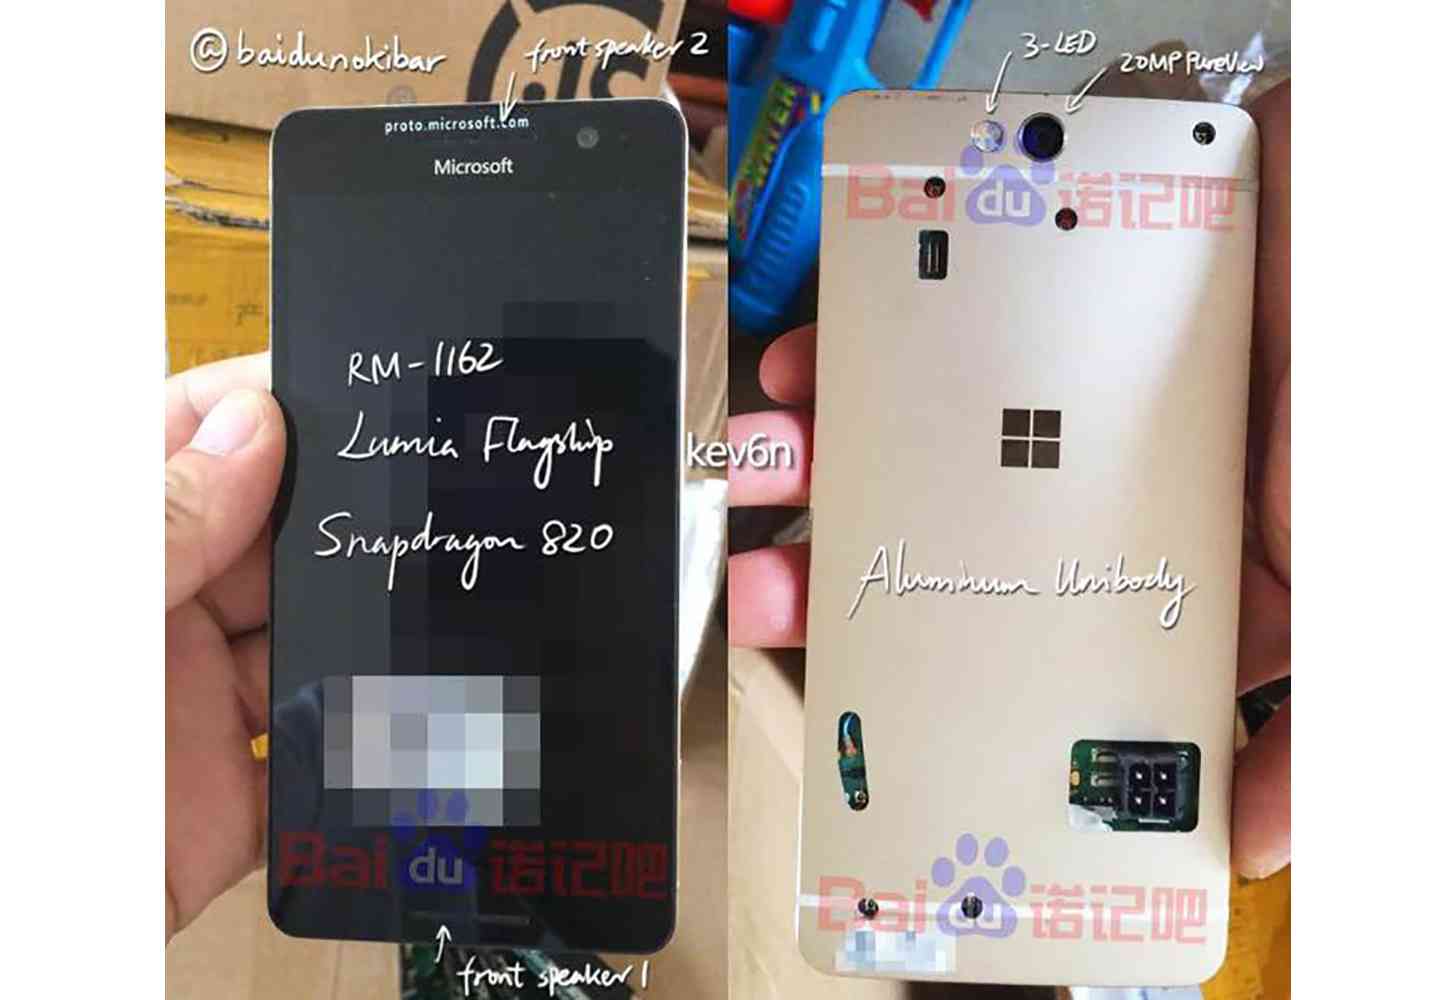 Microsoft Lumia 960 Northstar photos leak